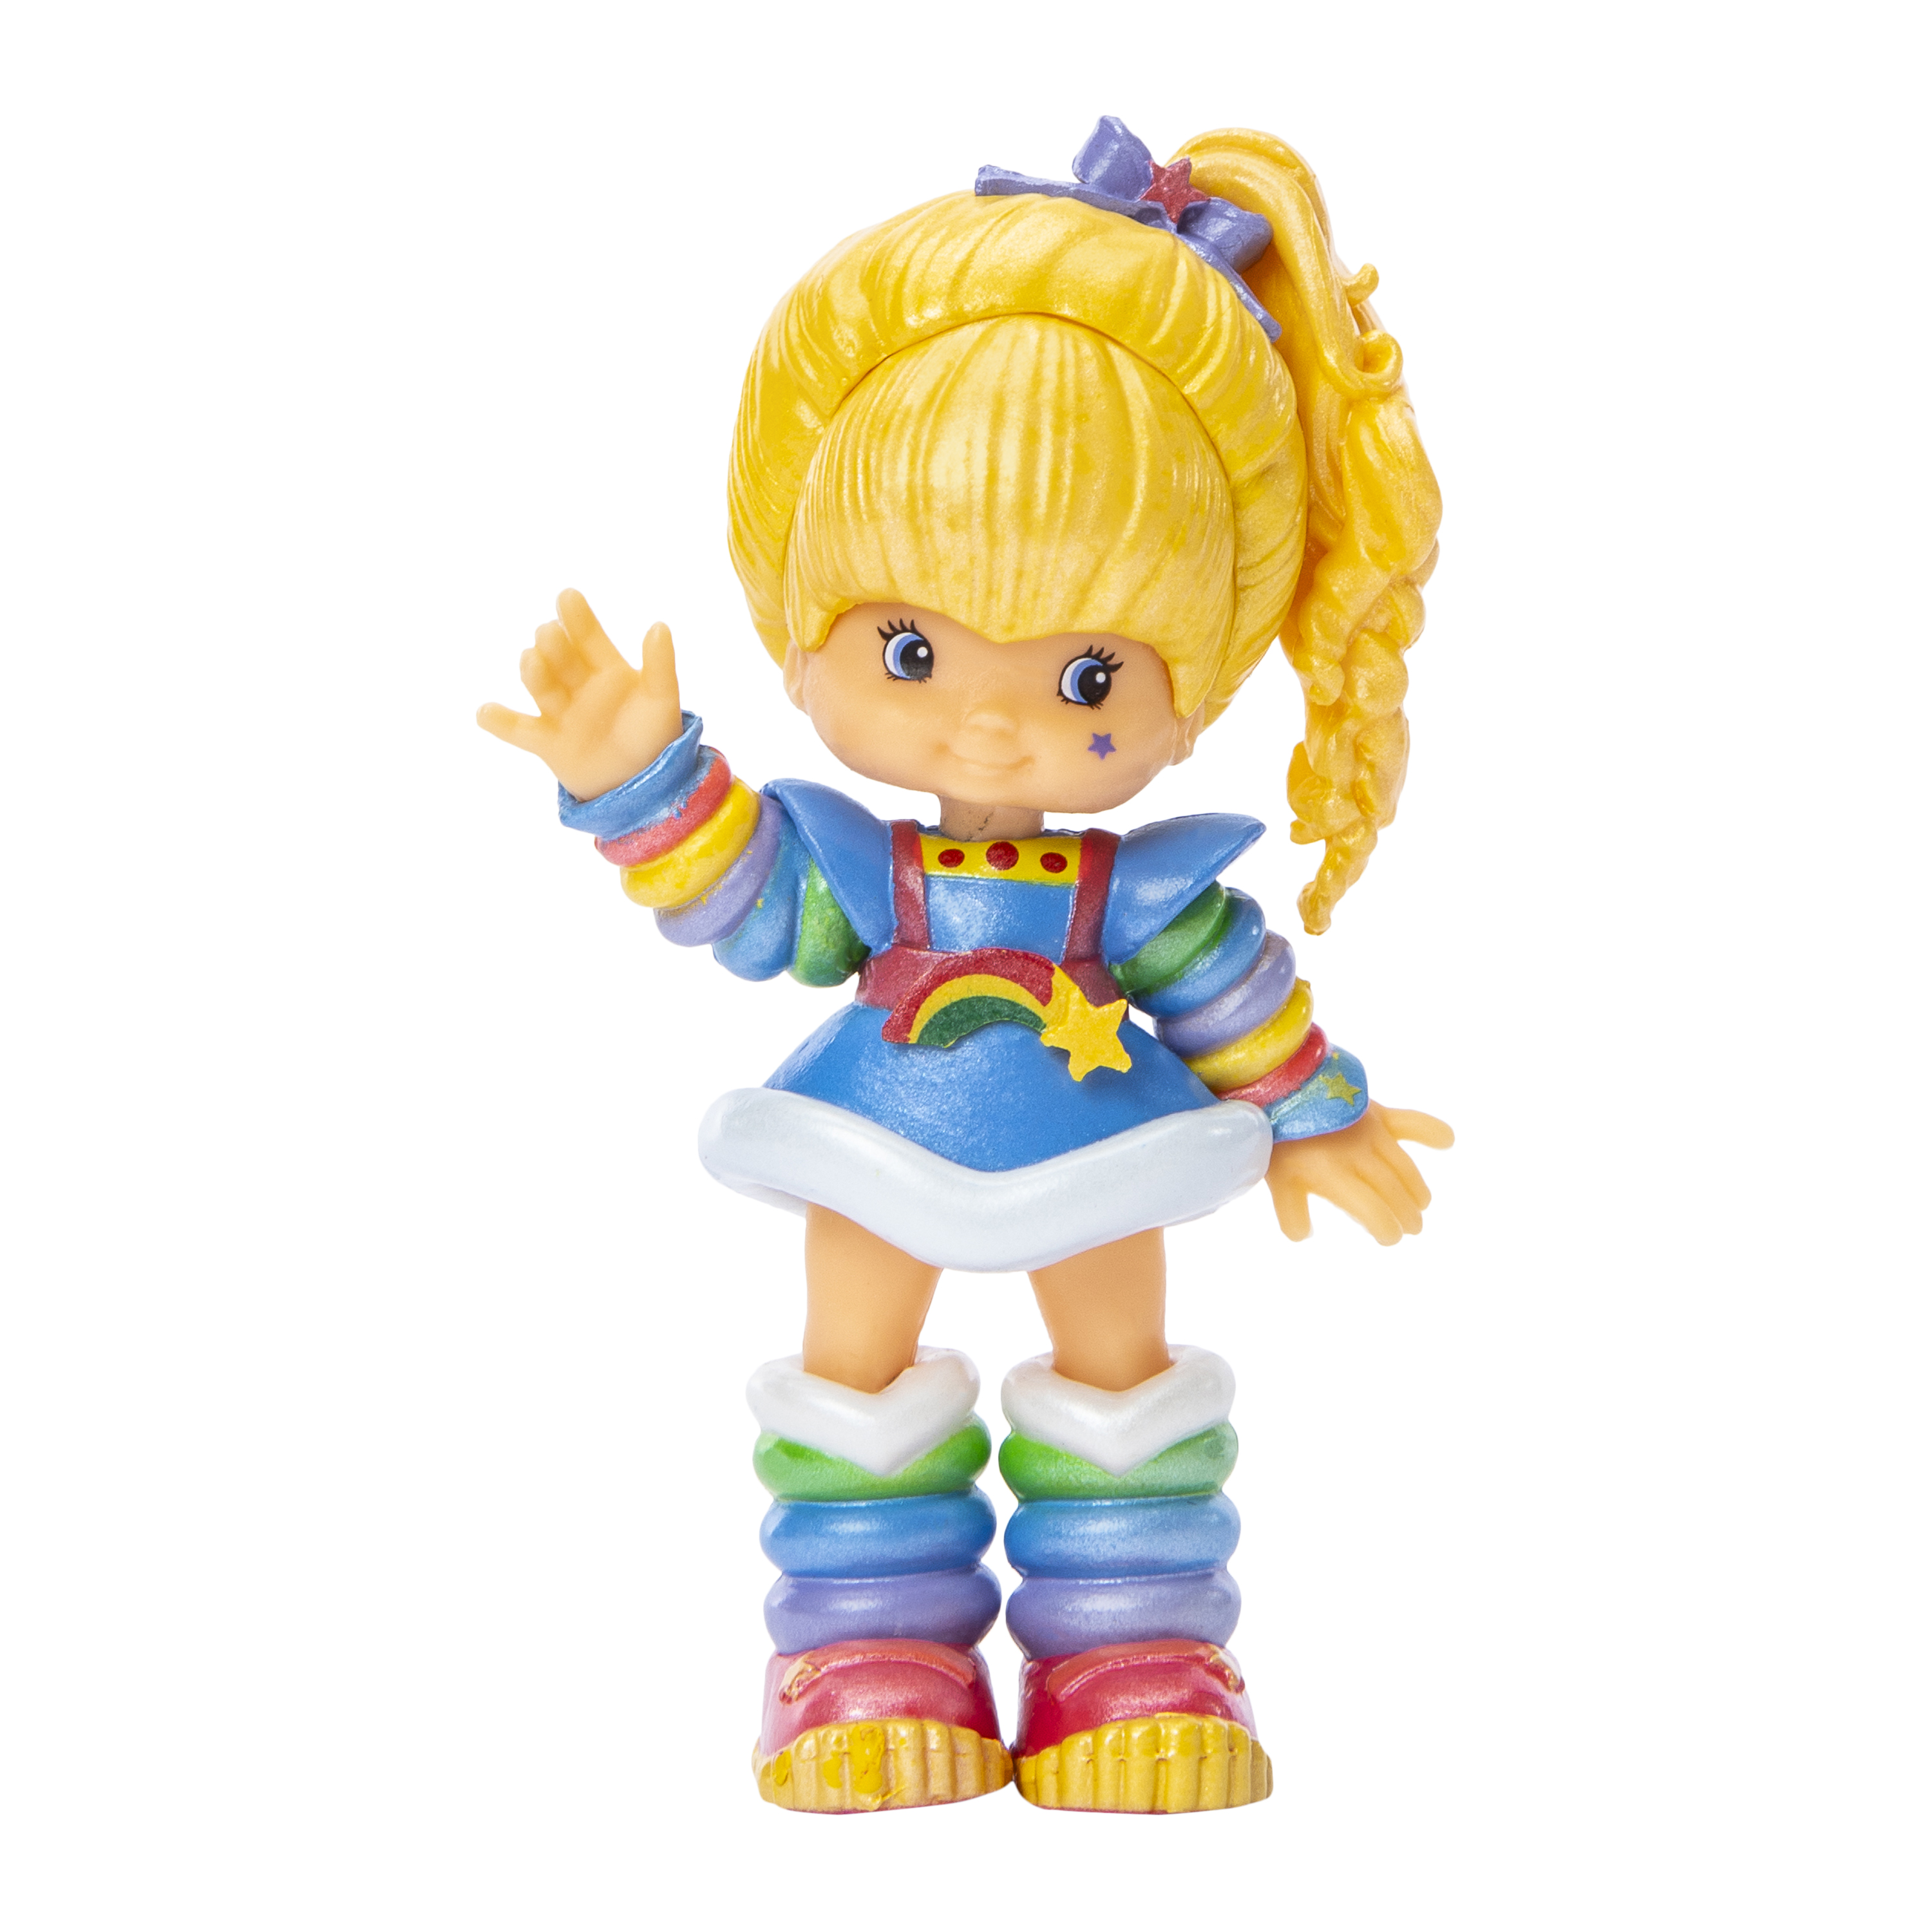 Happy 40th Anniversary Rainbow Brite!! The toys of my youth🌈 #rainbowbrite  #80skid